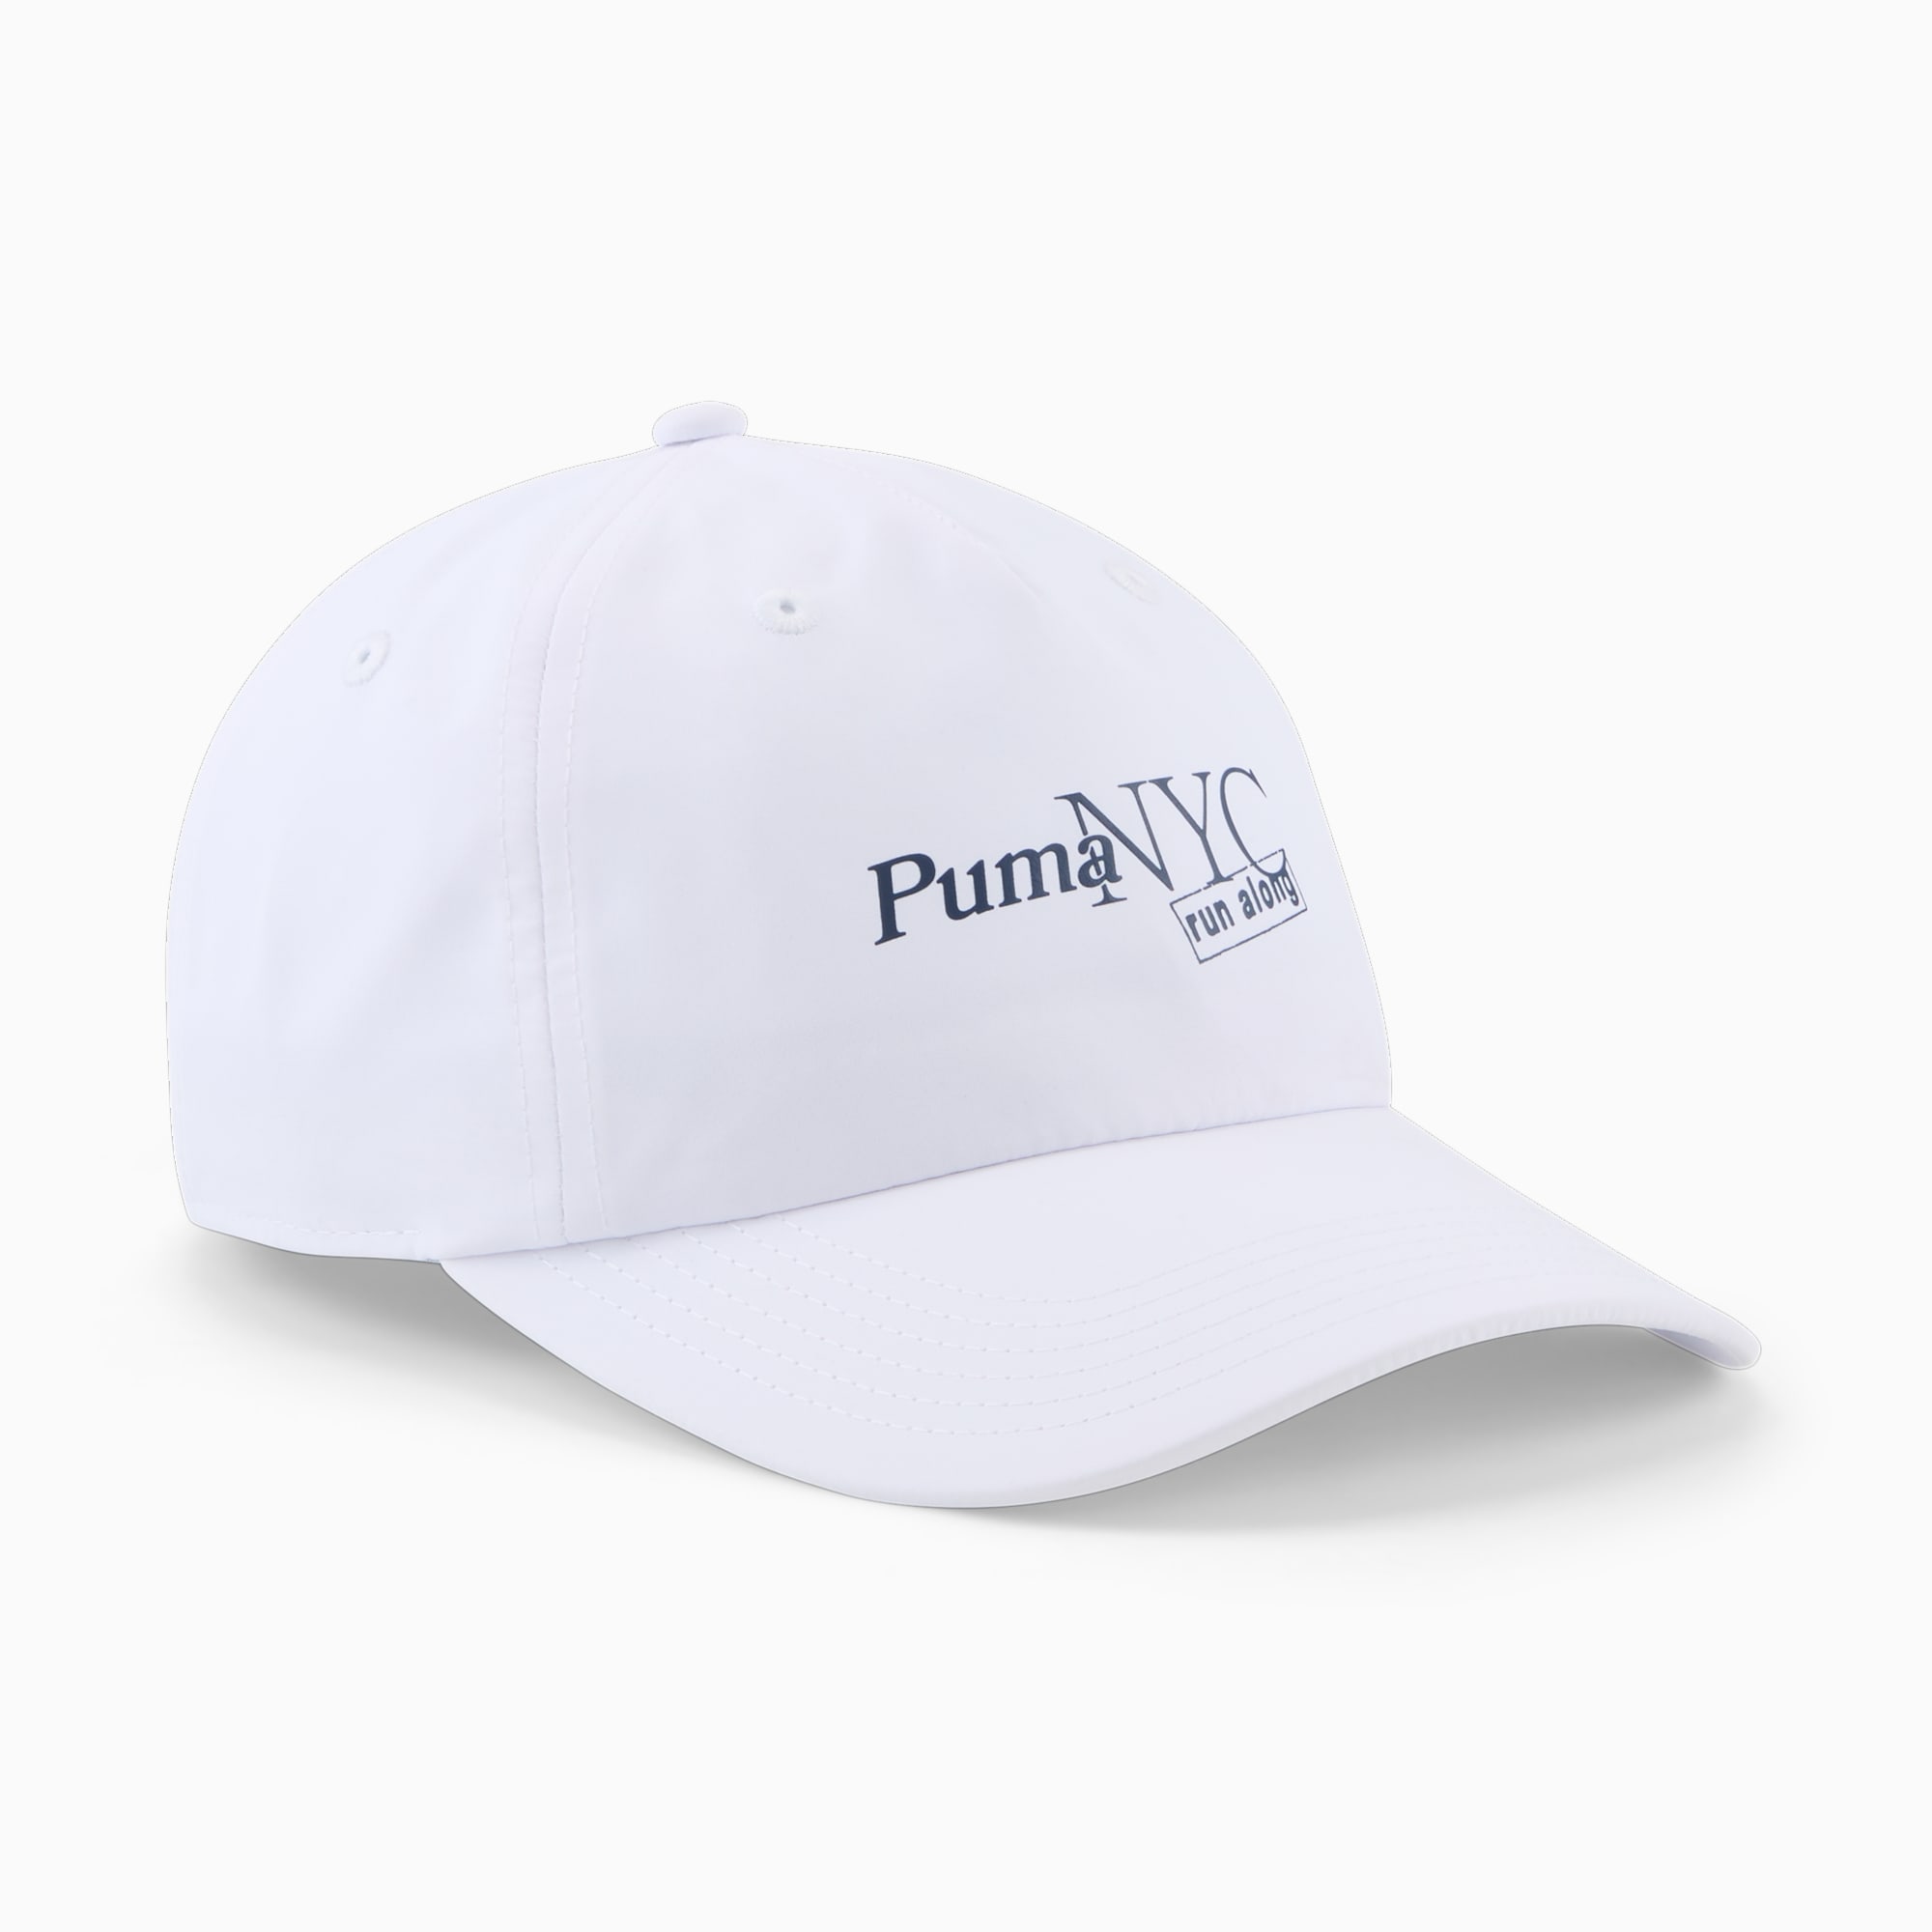 PUMA NYC Run Along Women's Cap